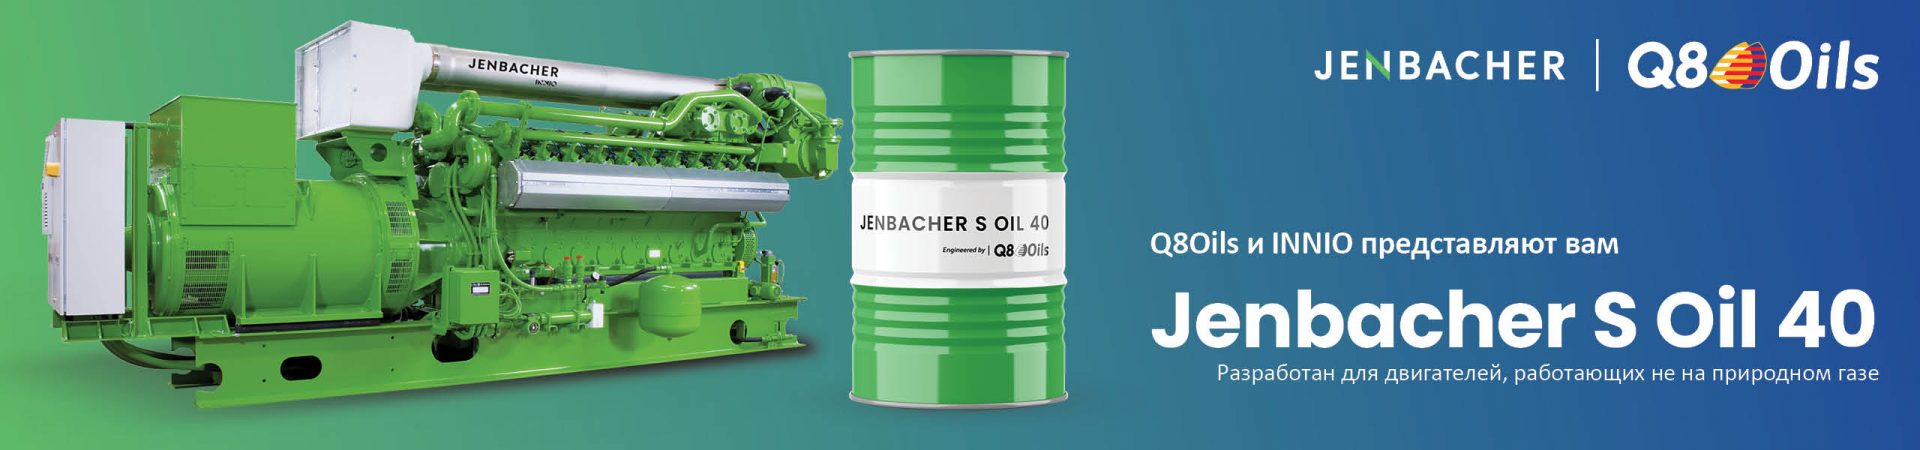 Jenbacher S Oil 40 - RU